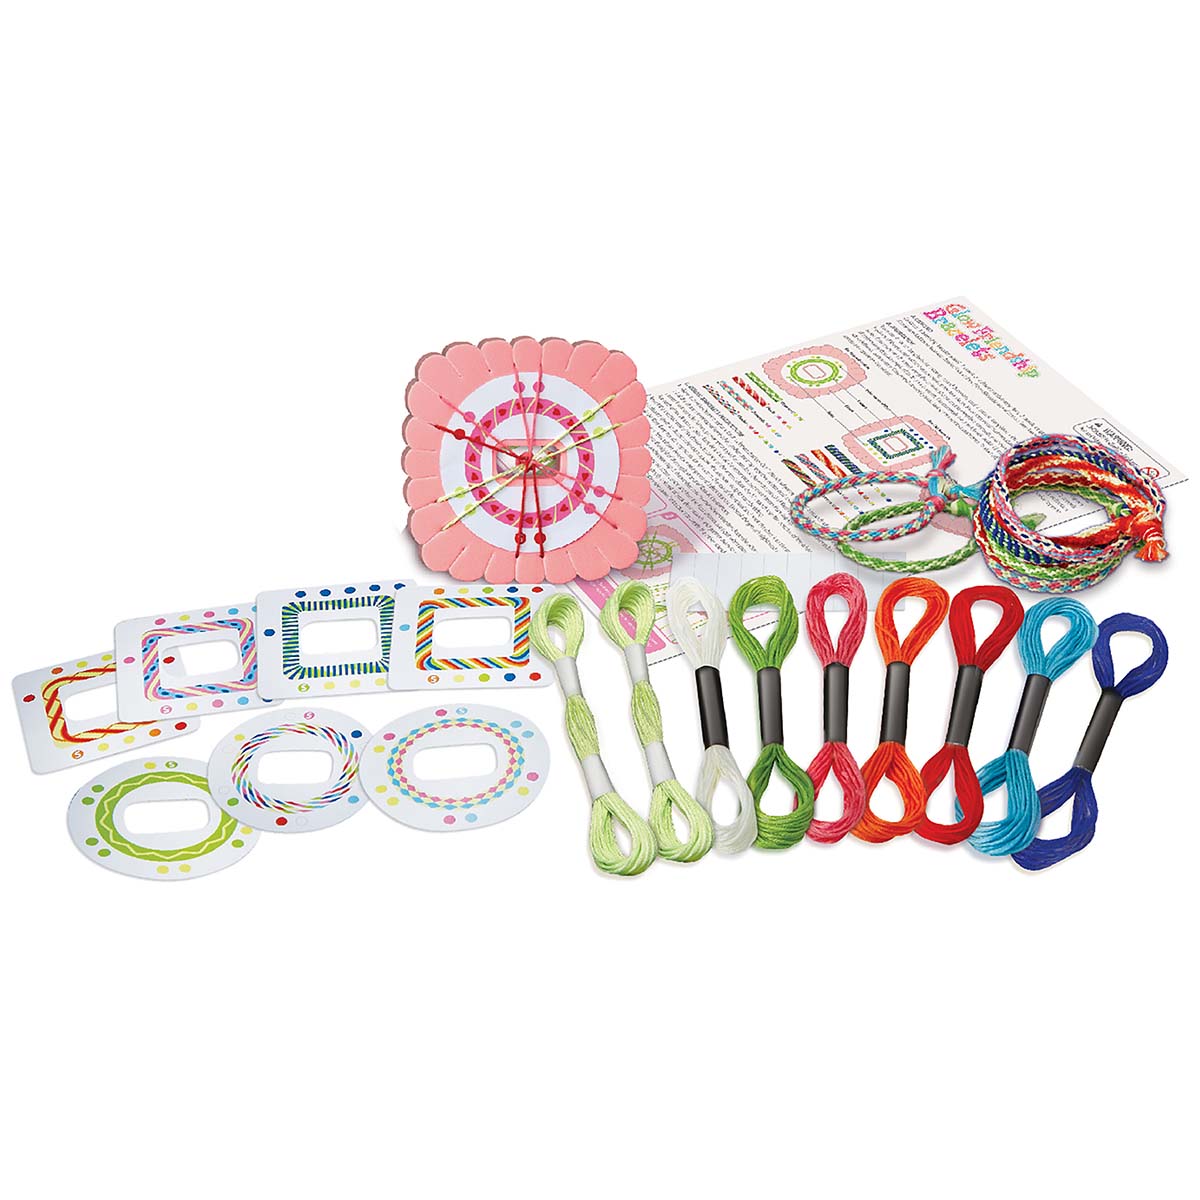 Glow Friendship Bracelets Kit at Toys R Us UK